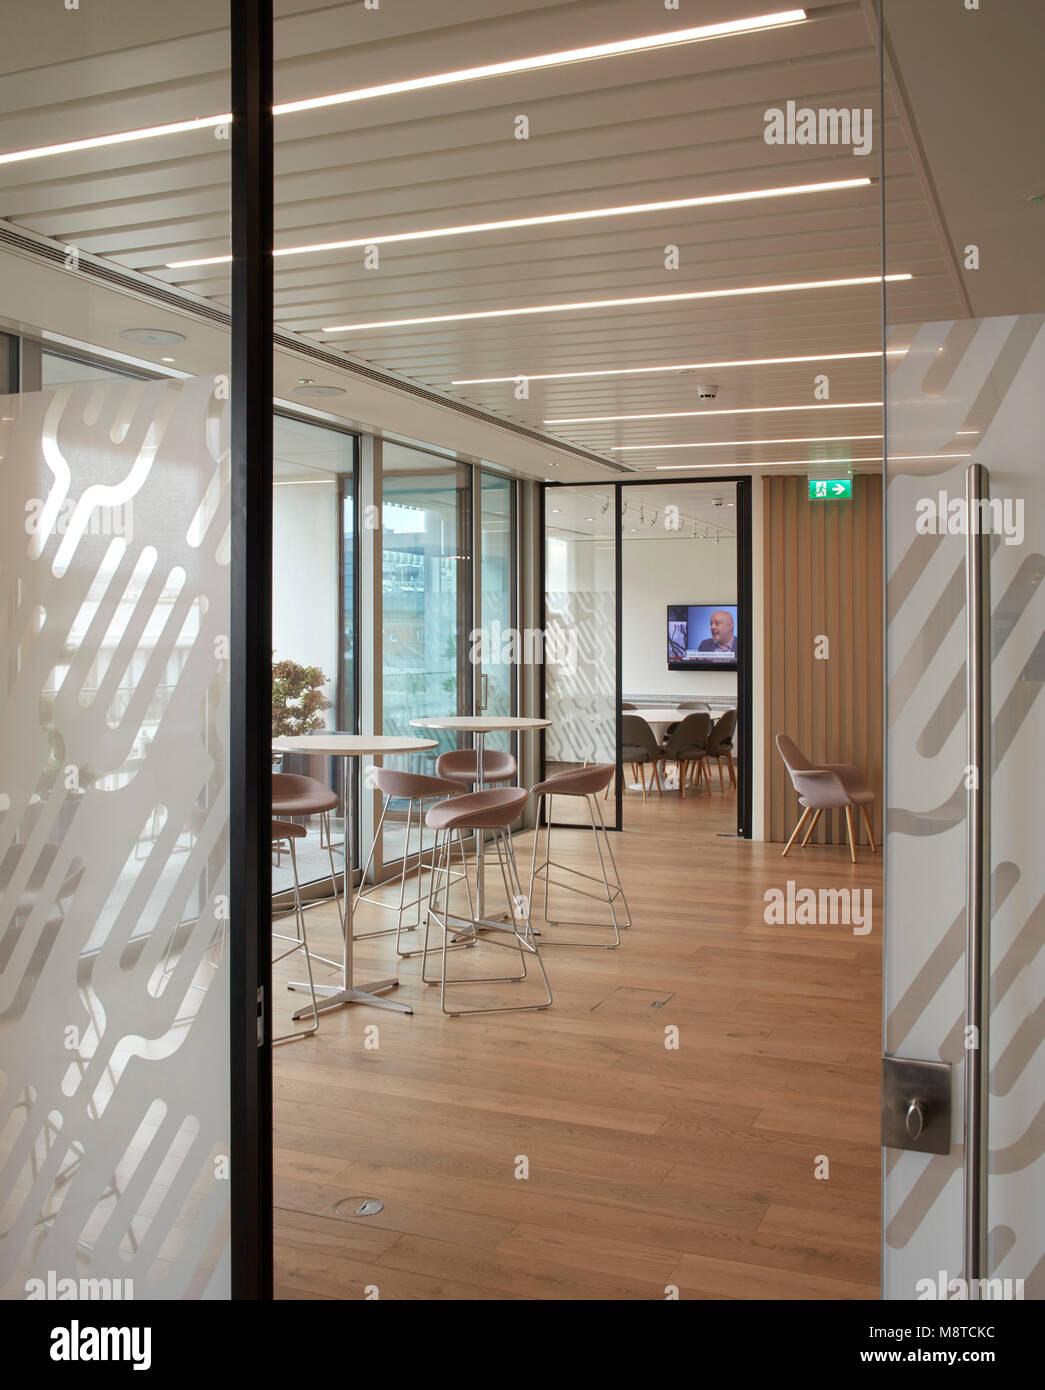 Office floor. Office Interior, London, United Kingdom. Architect: NA, 2017. Stock Photo